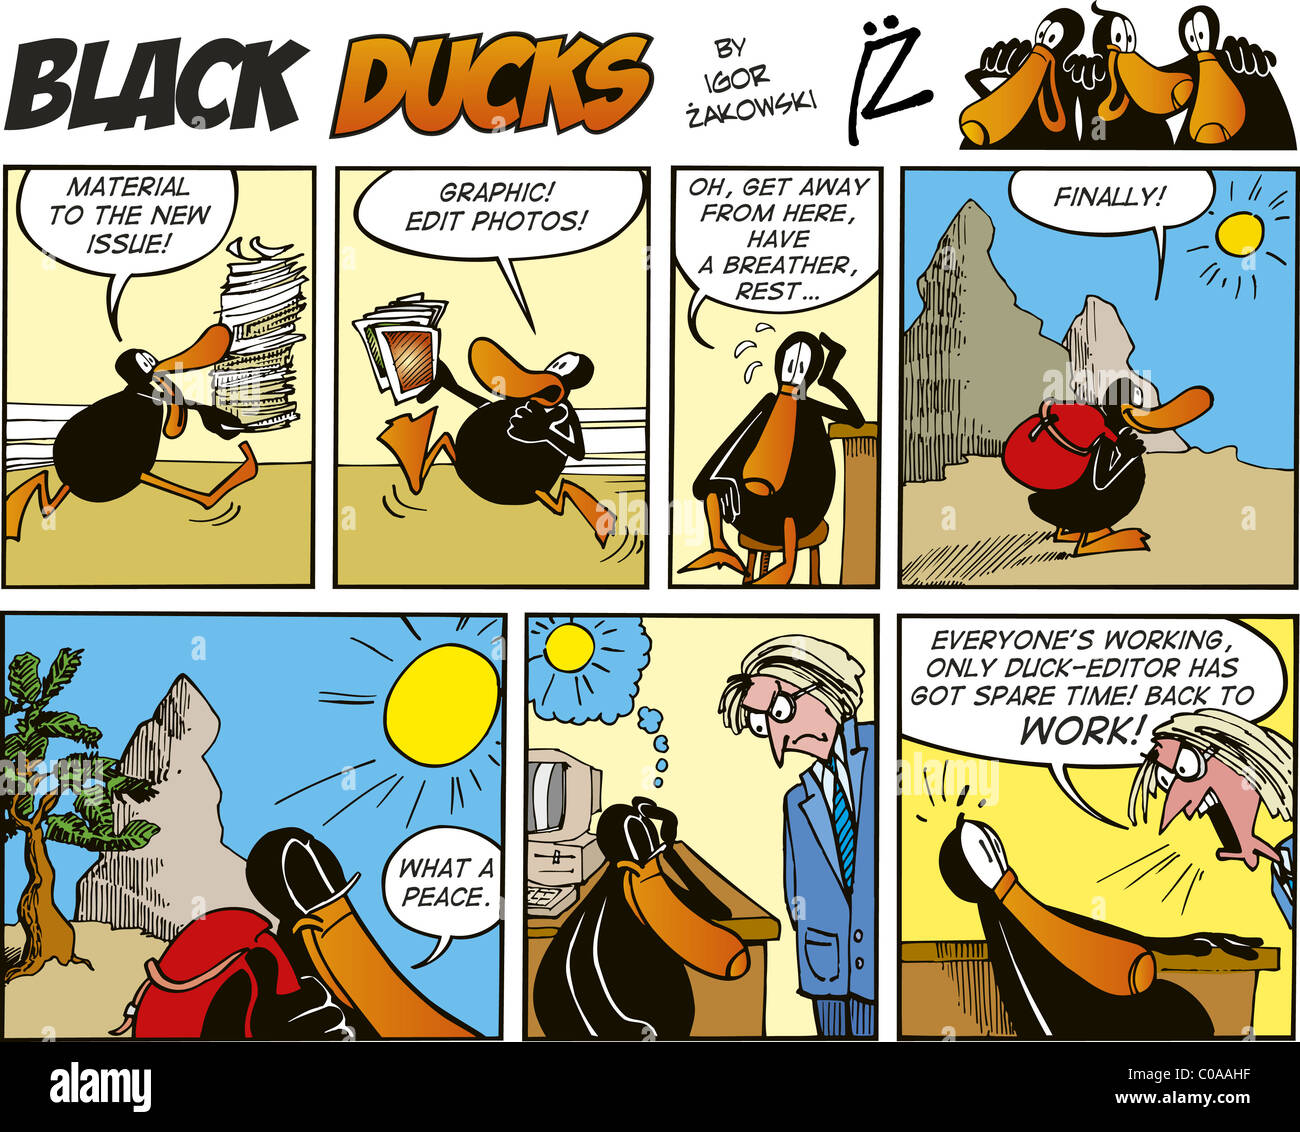 Black Ducks Comic Strip episode 54 Stock Photo